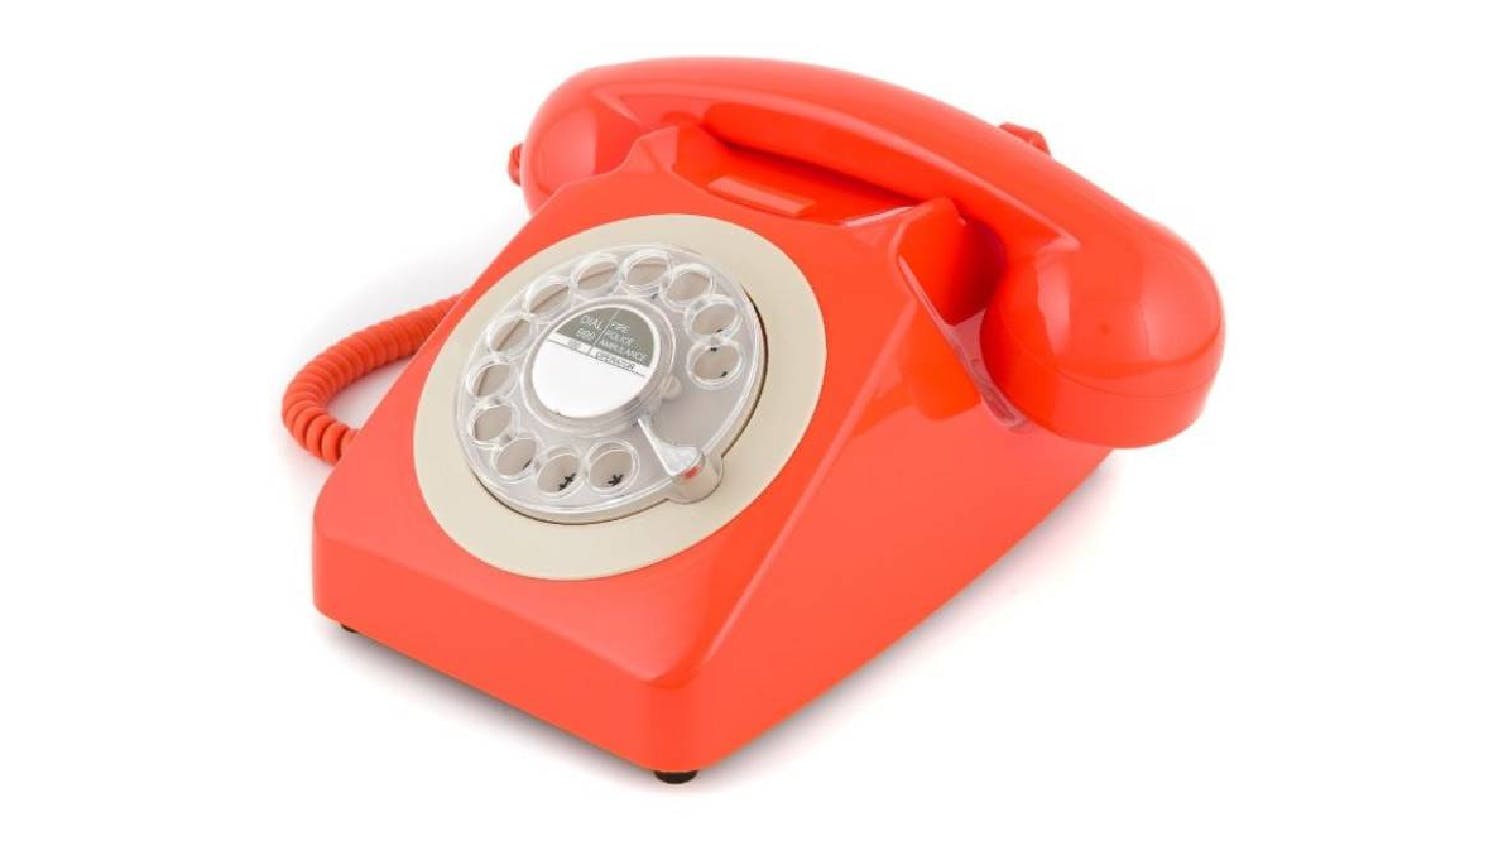 GPO 746 Rotary Corded Phone - Orange